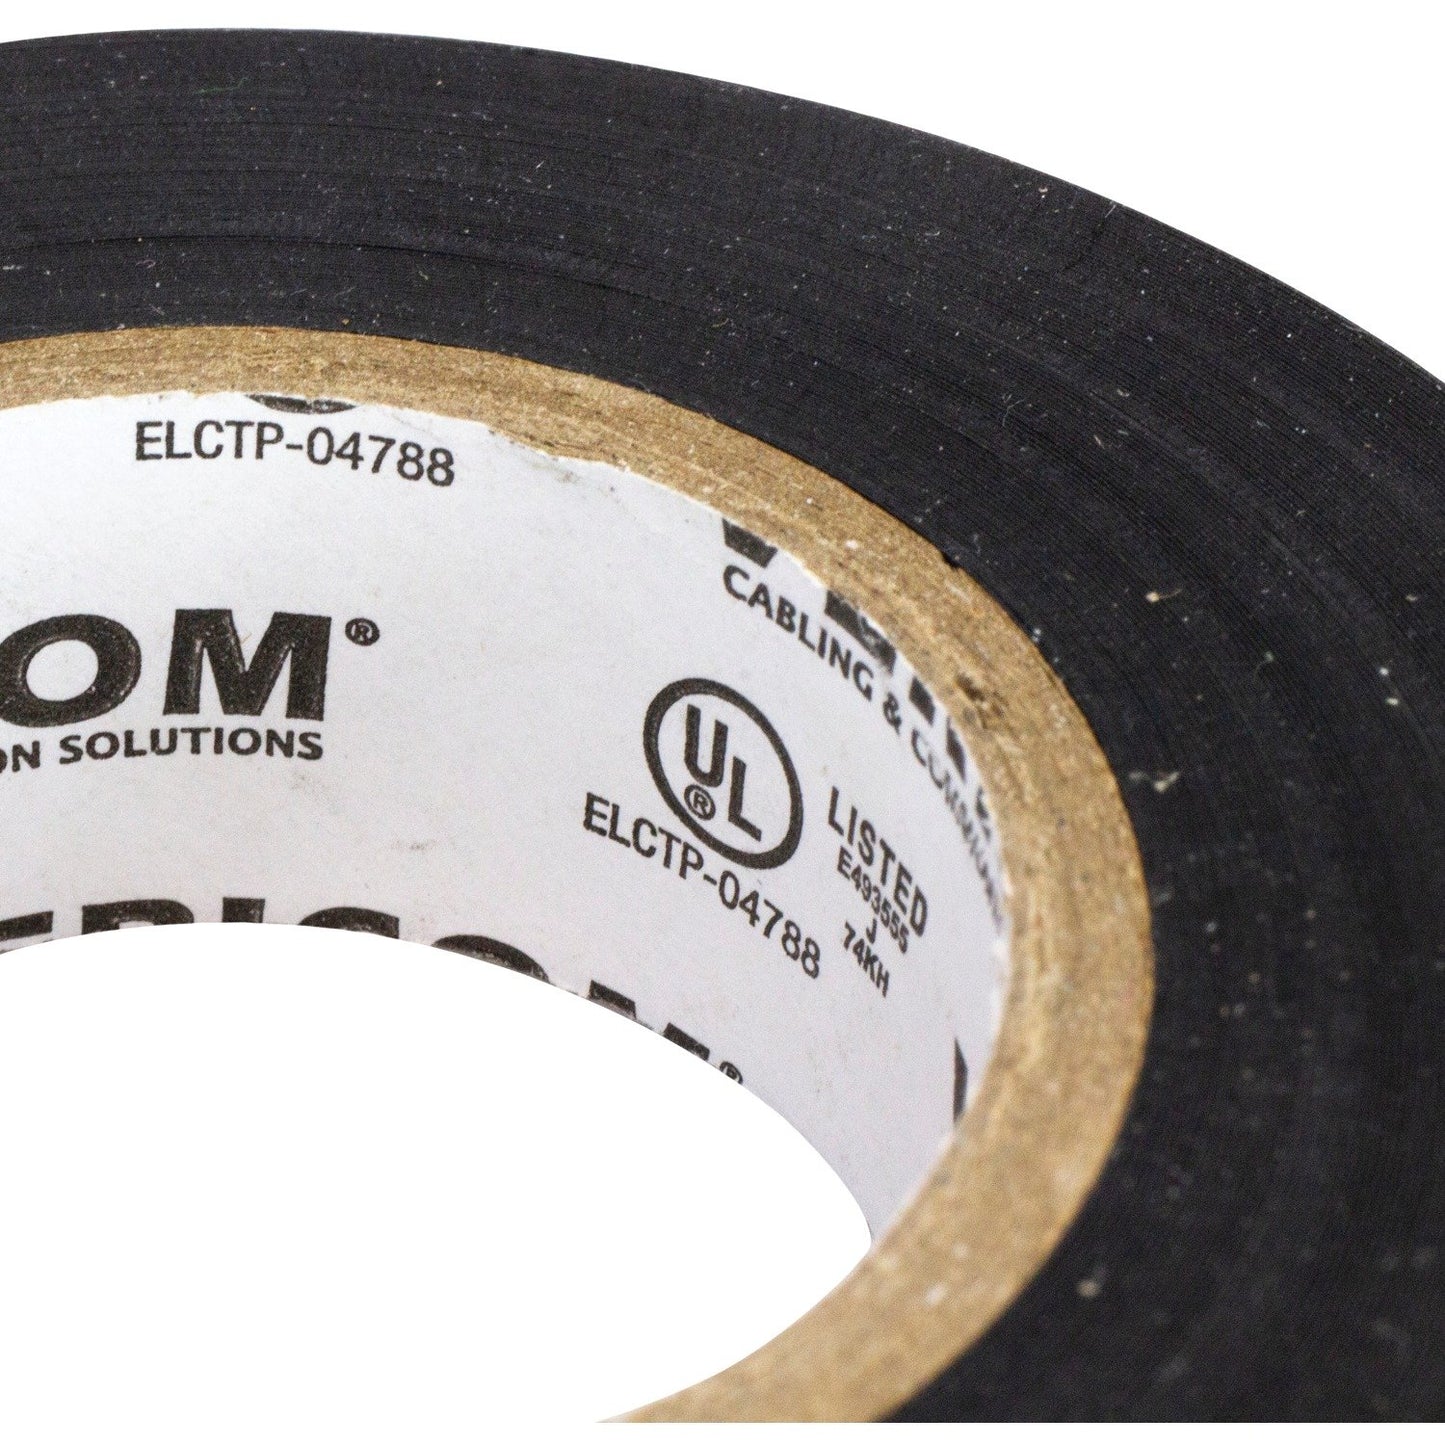 VERICOM ELCTP-04788 Commercial-Grade Electrical Tape, 60 Feet